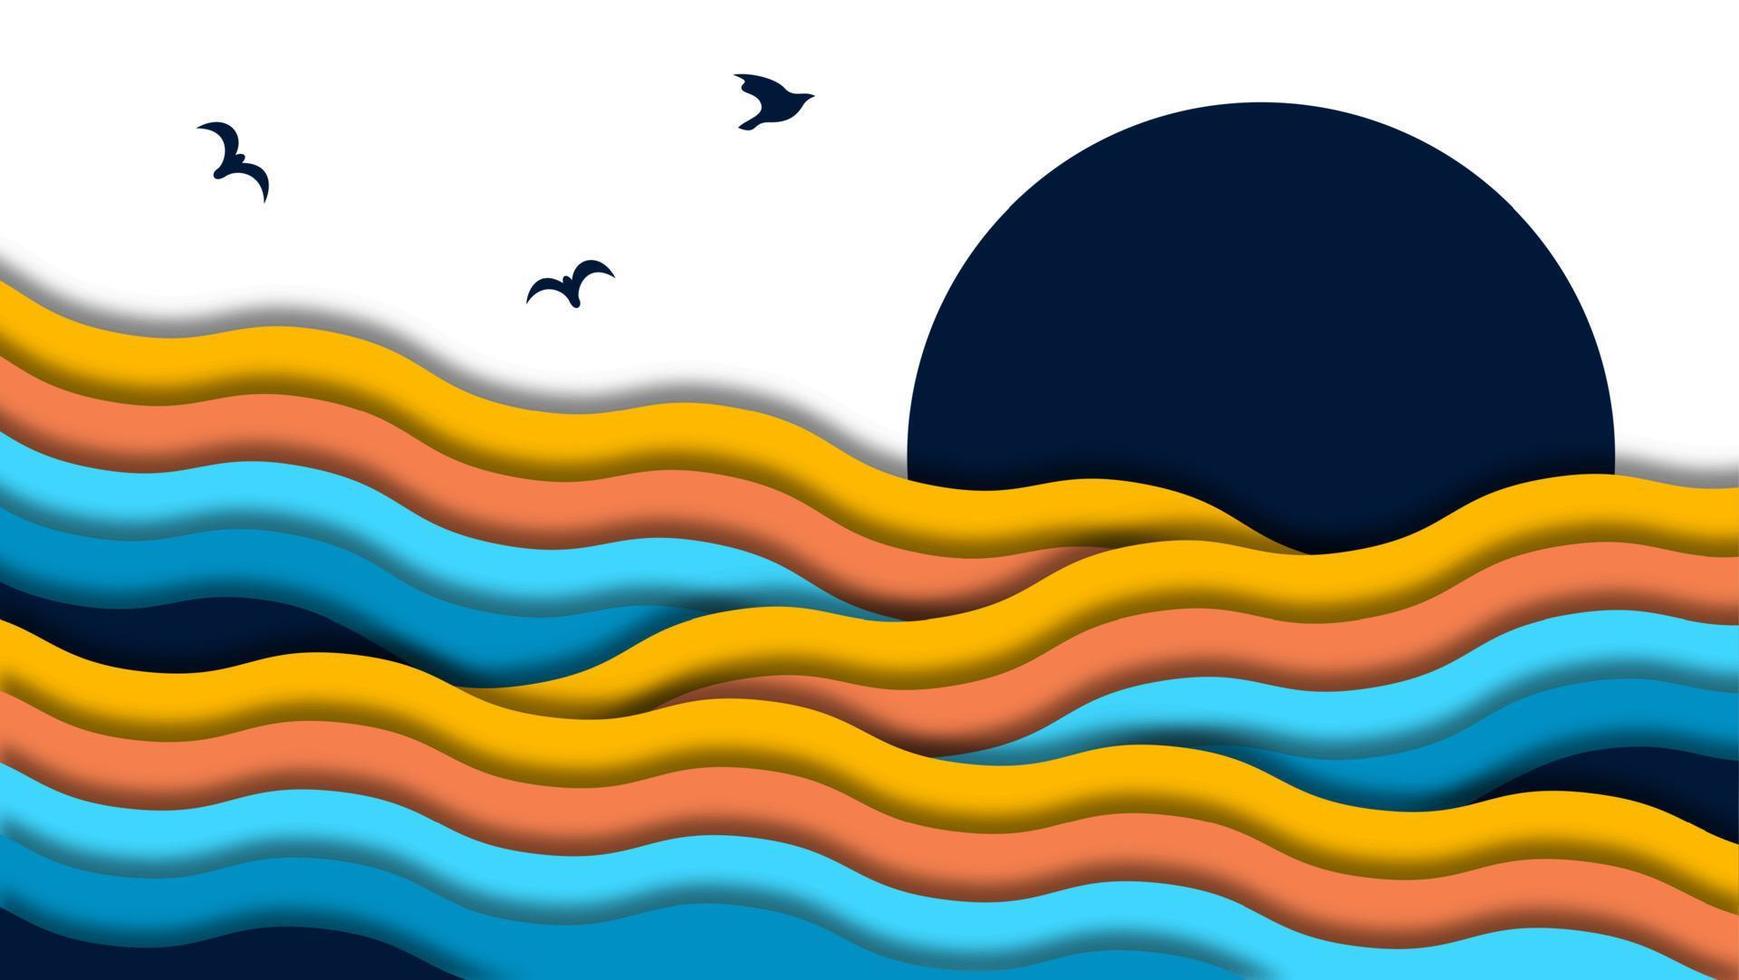 abstract golven achtergrond met papercut stijl vector